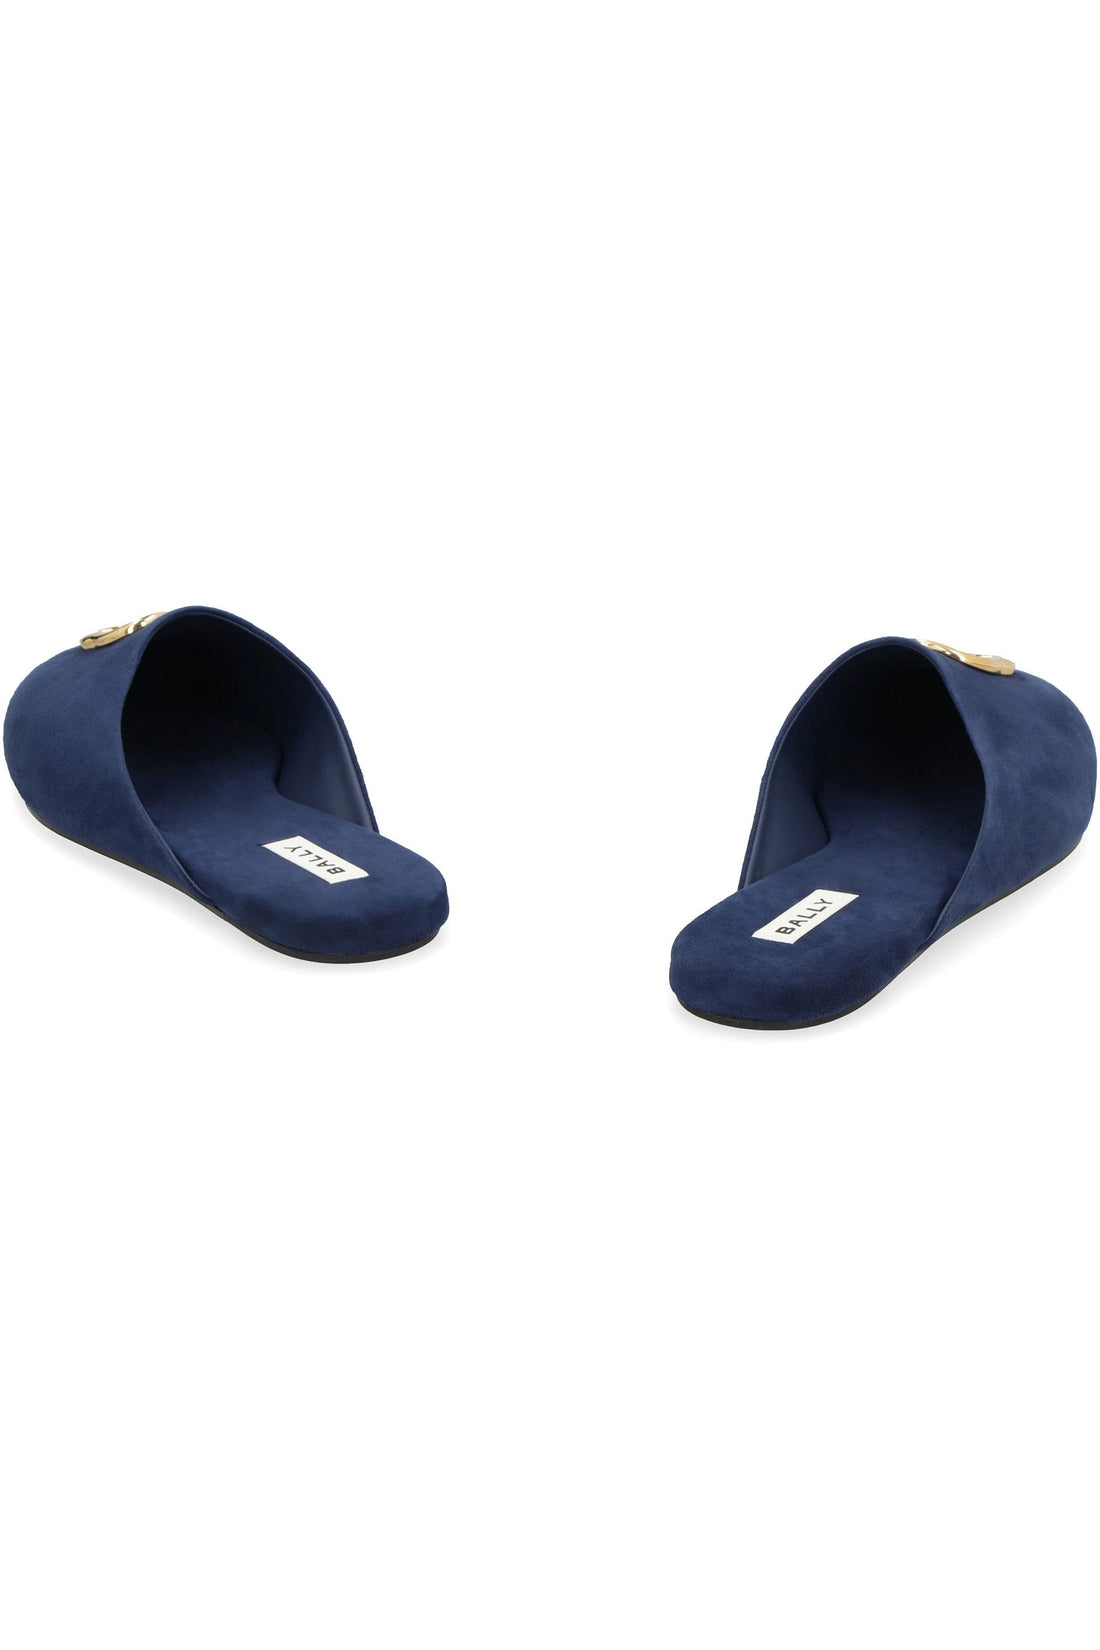 Bally-OUTLET-SALE-San Fernando slippers-ARCHIVIST